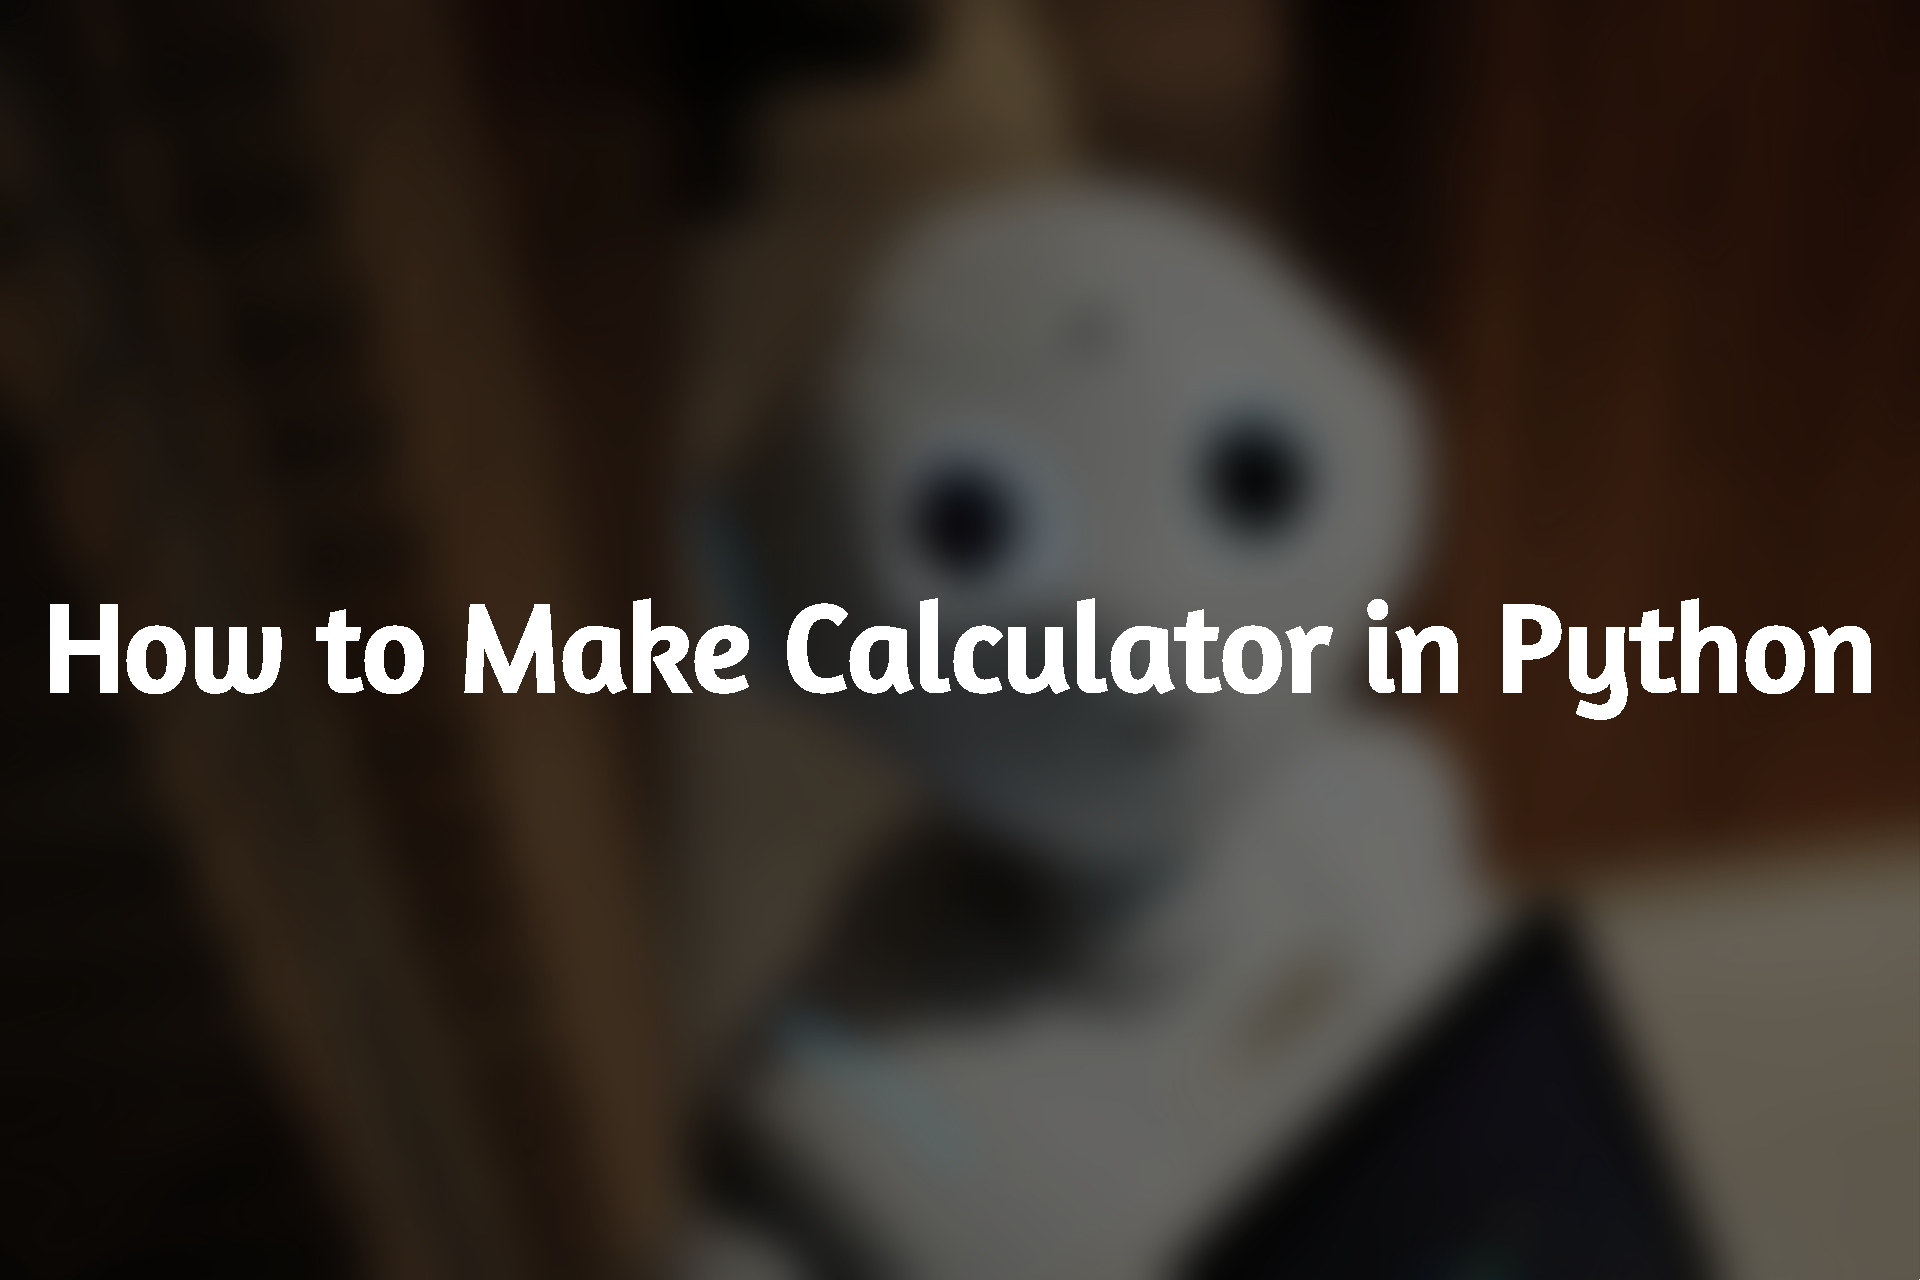 Make Calculator in Python